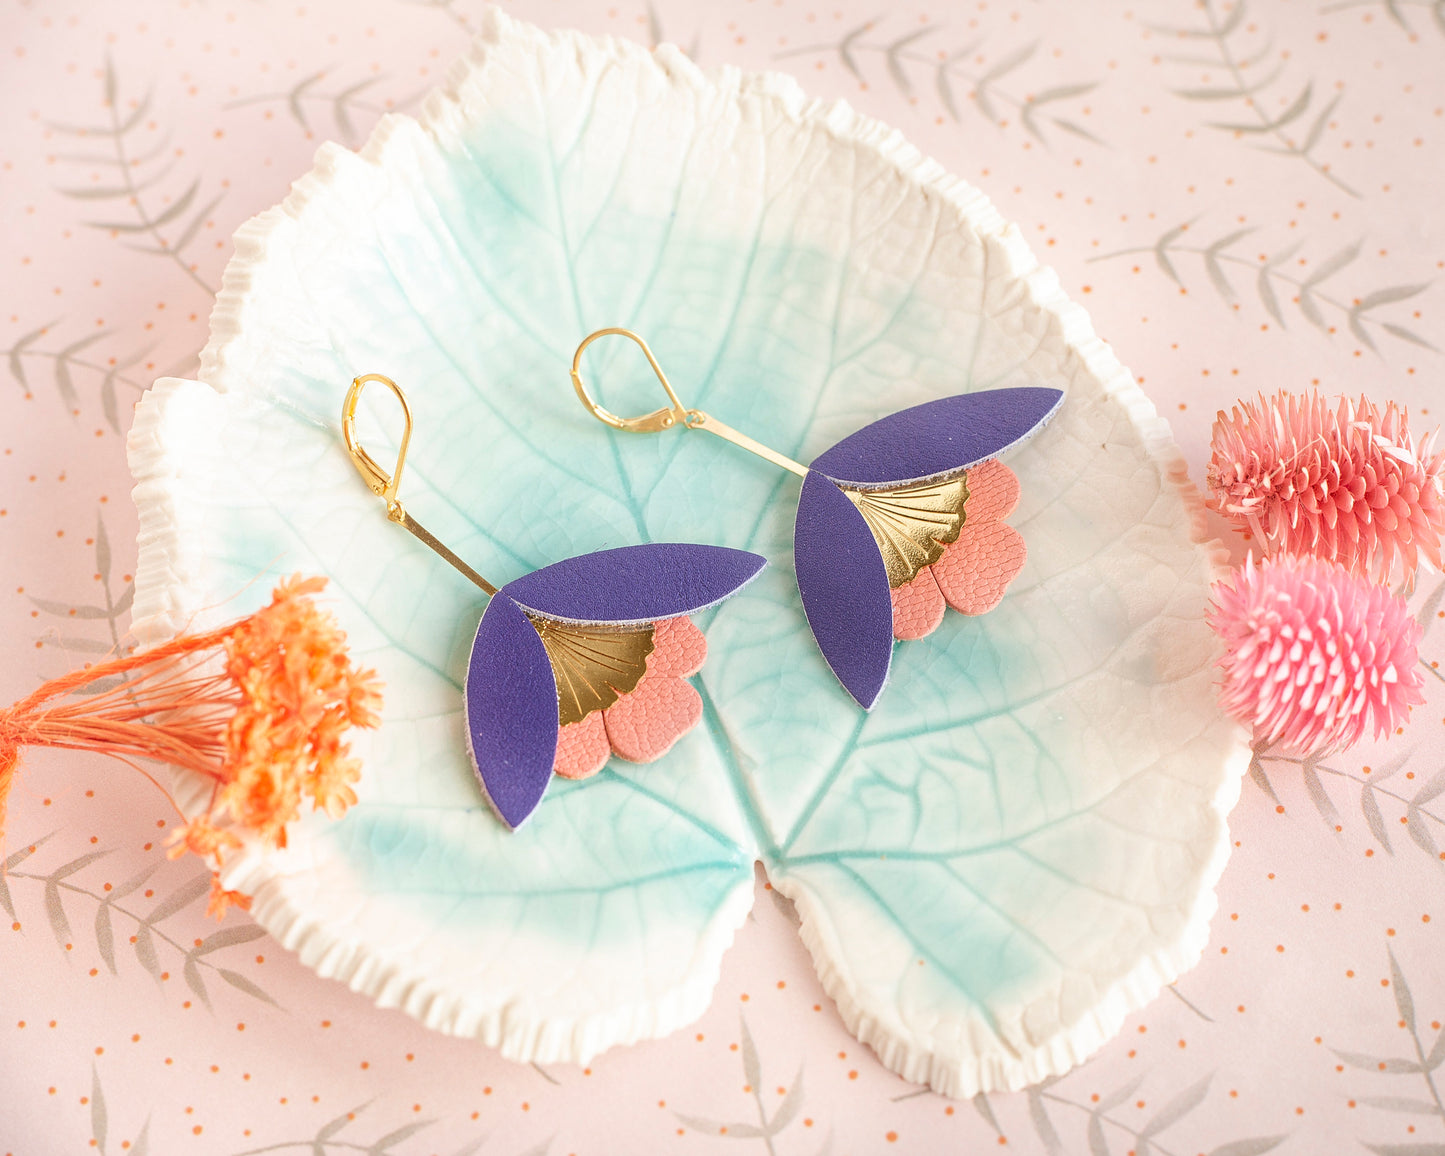 Ginkgo Flower earrings in purple and pink leather